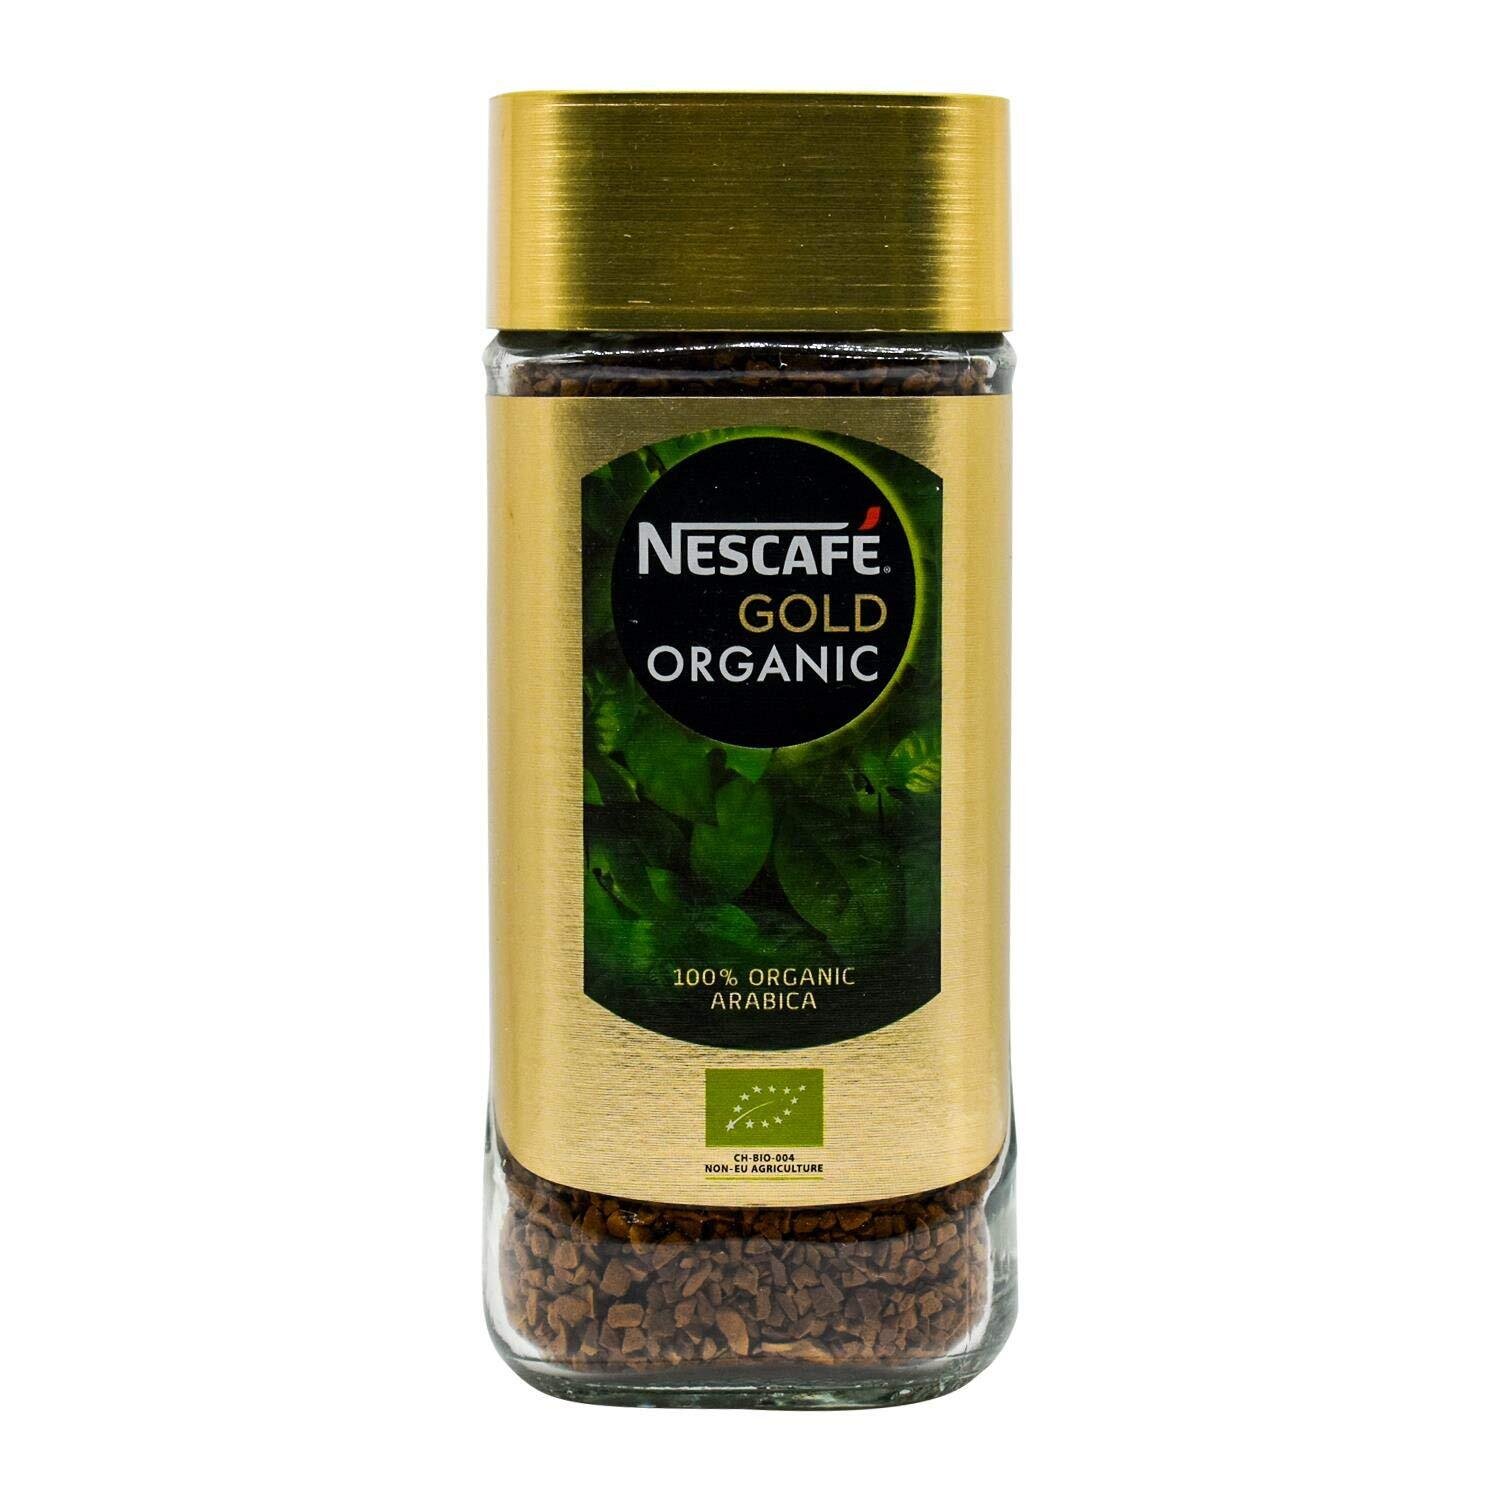 Nescafe Gold Organic Imported